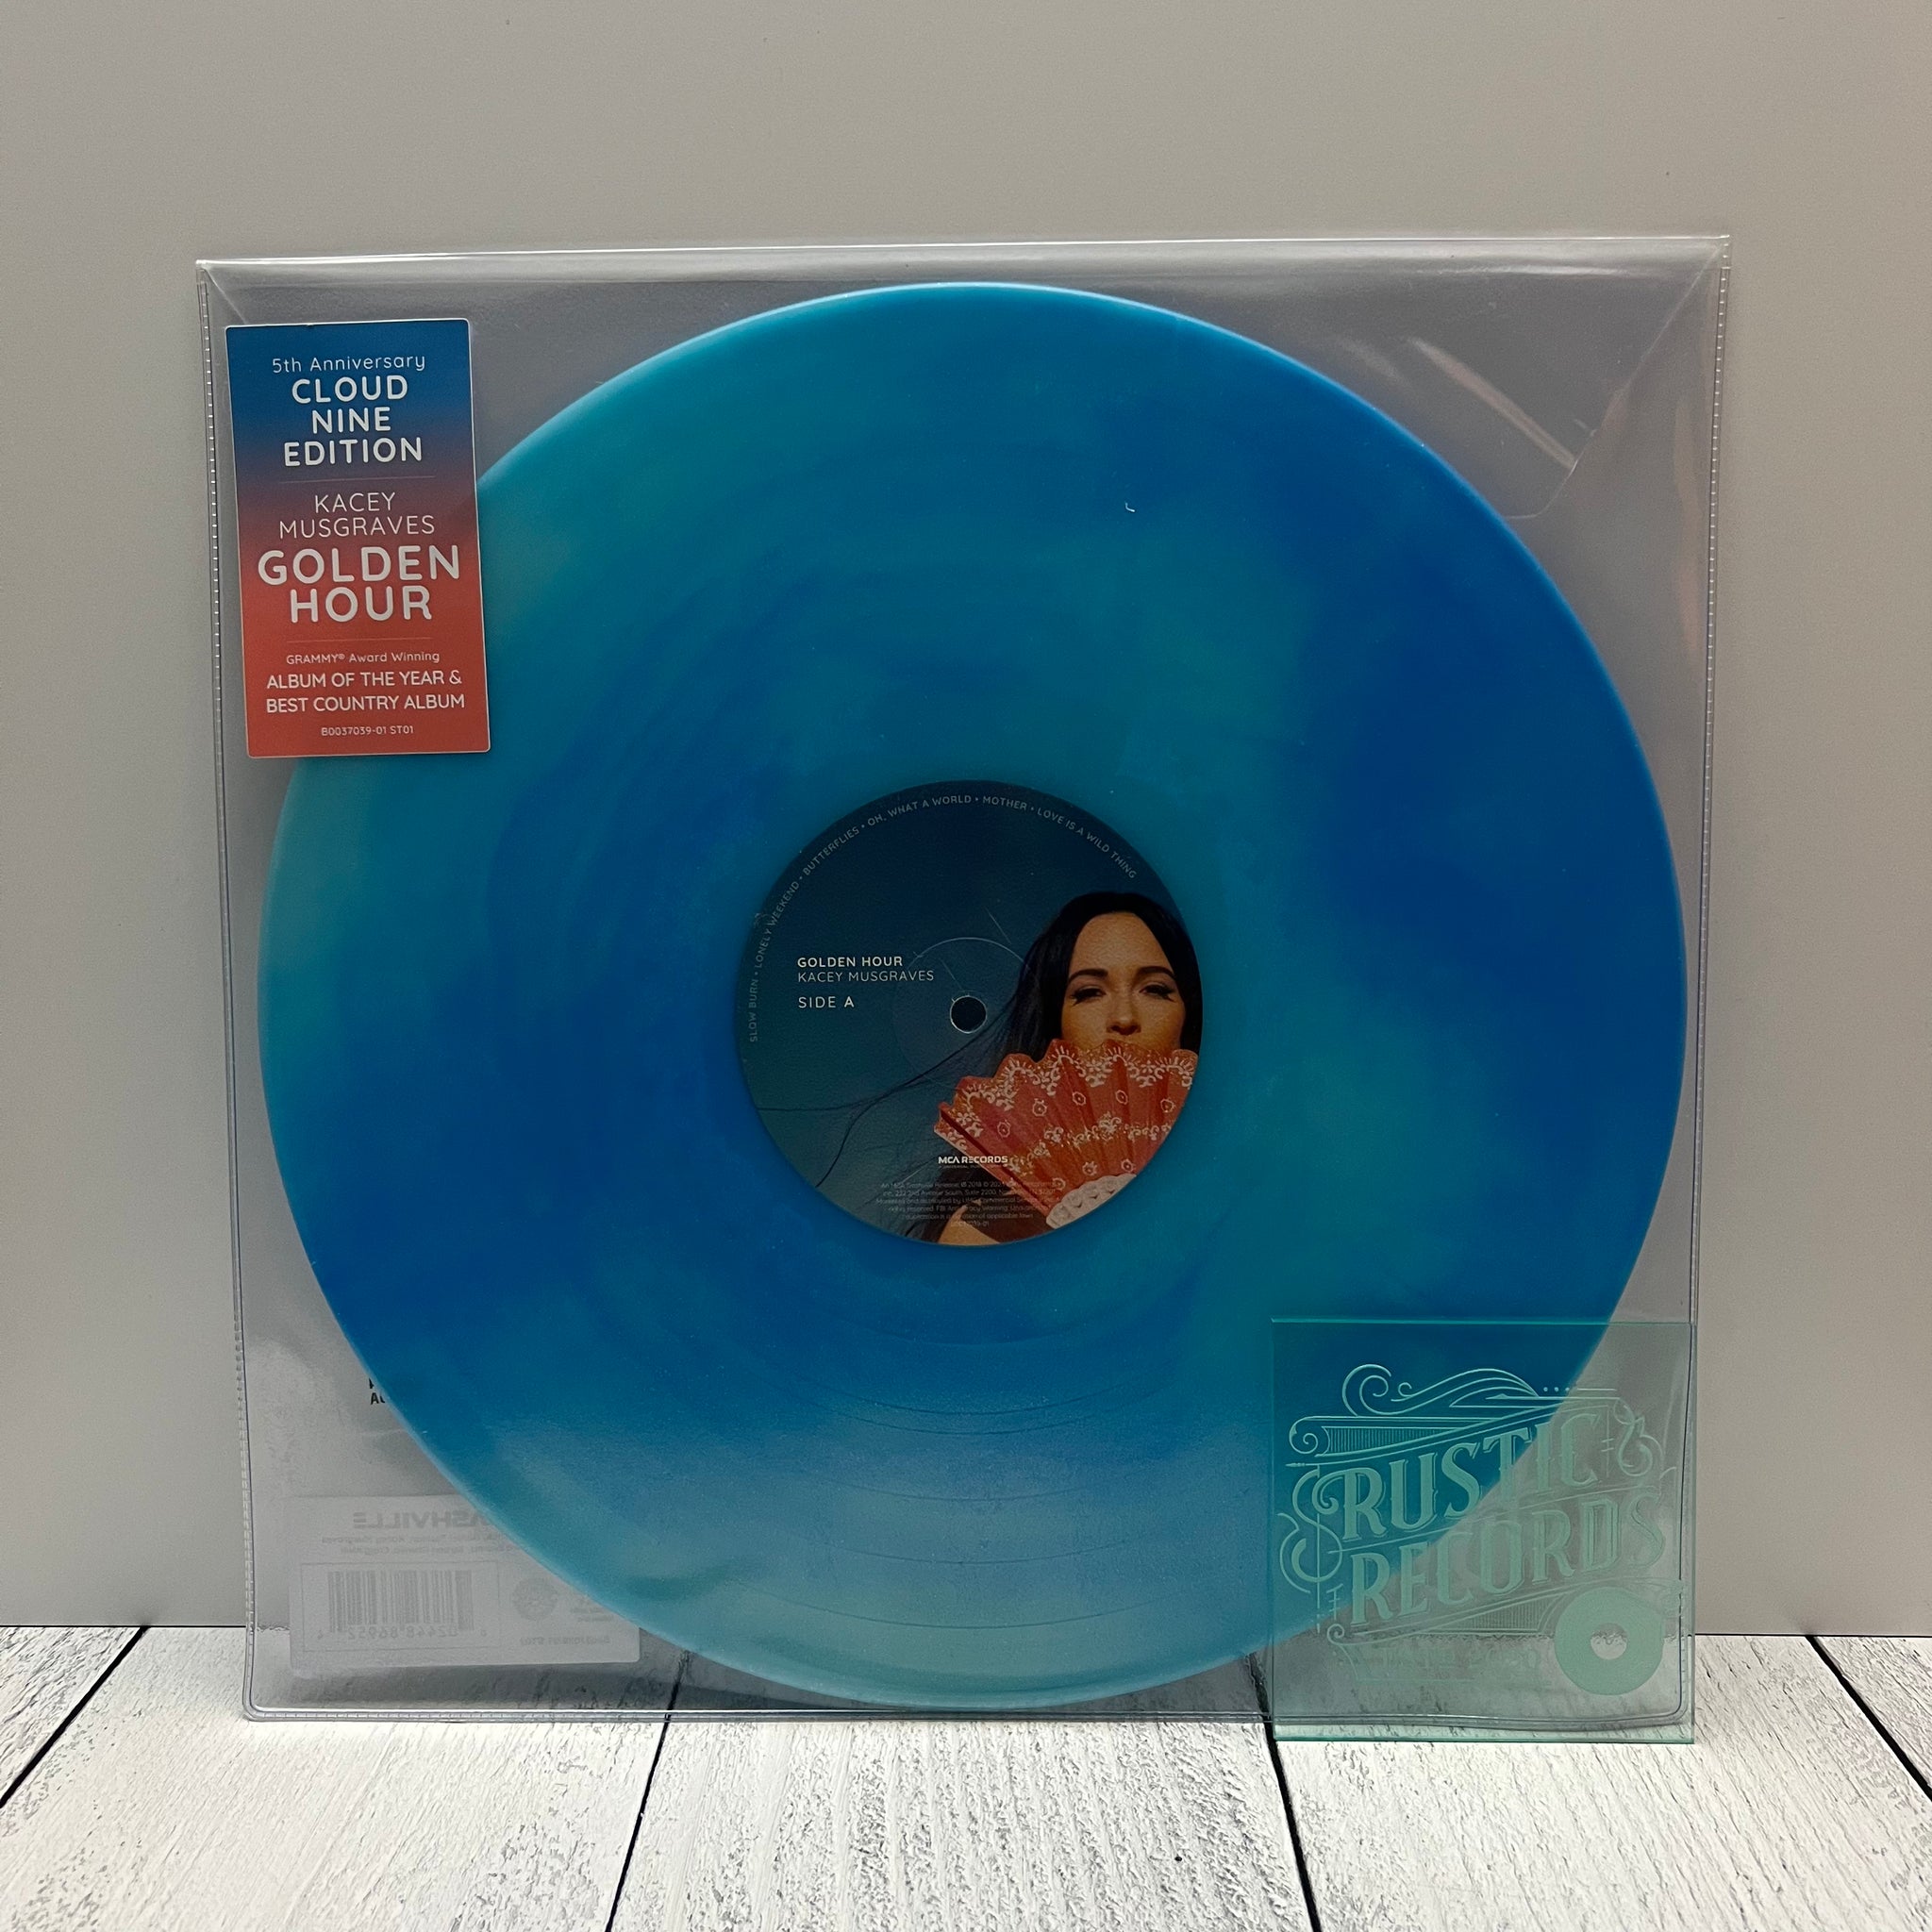 Kacey Musgraves - Golden Hour (5th Anniversary Cloud Nine Edition Sky Blue Swirl Vinyl)